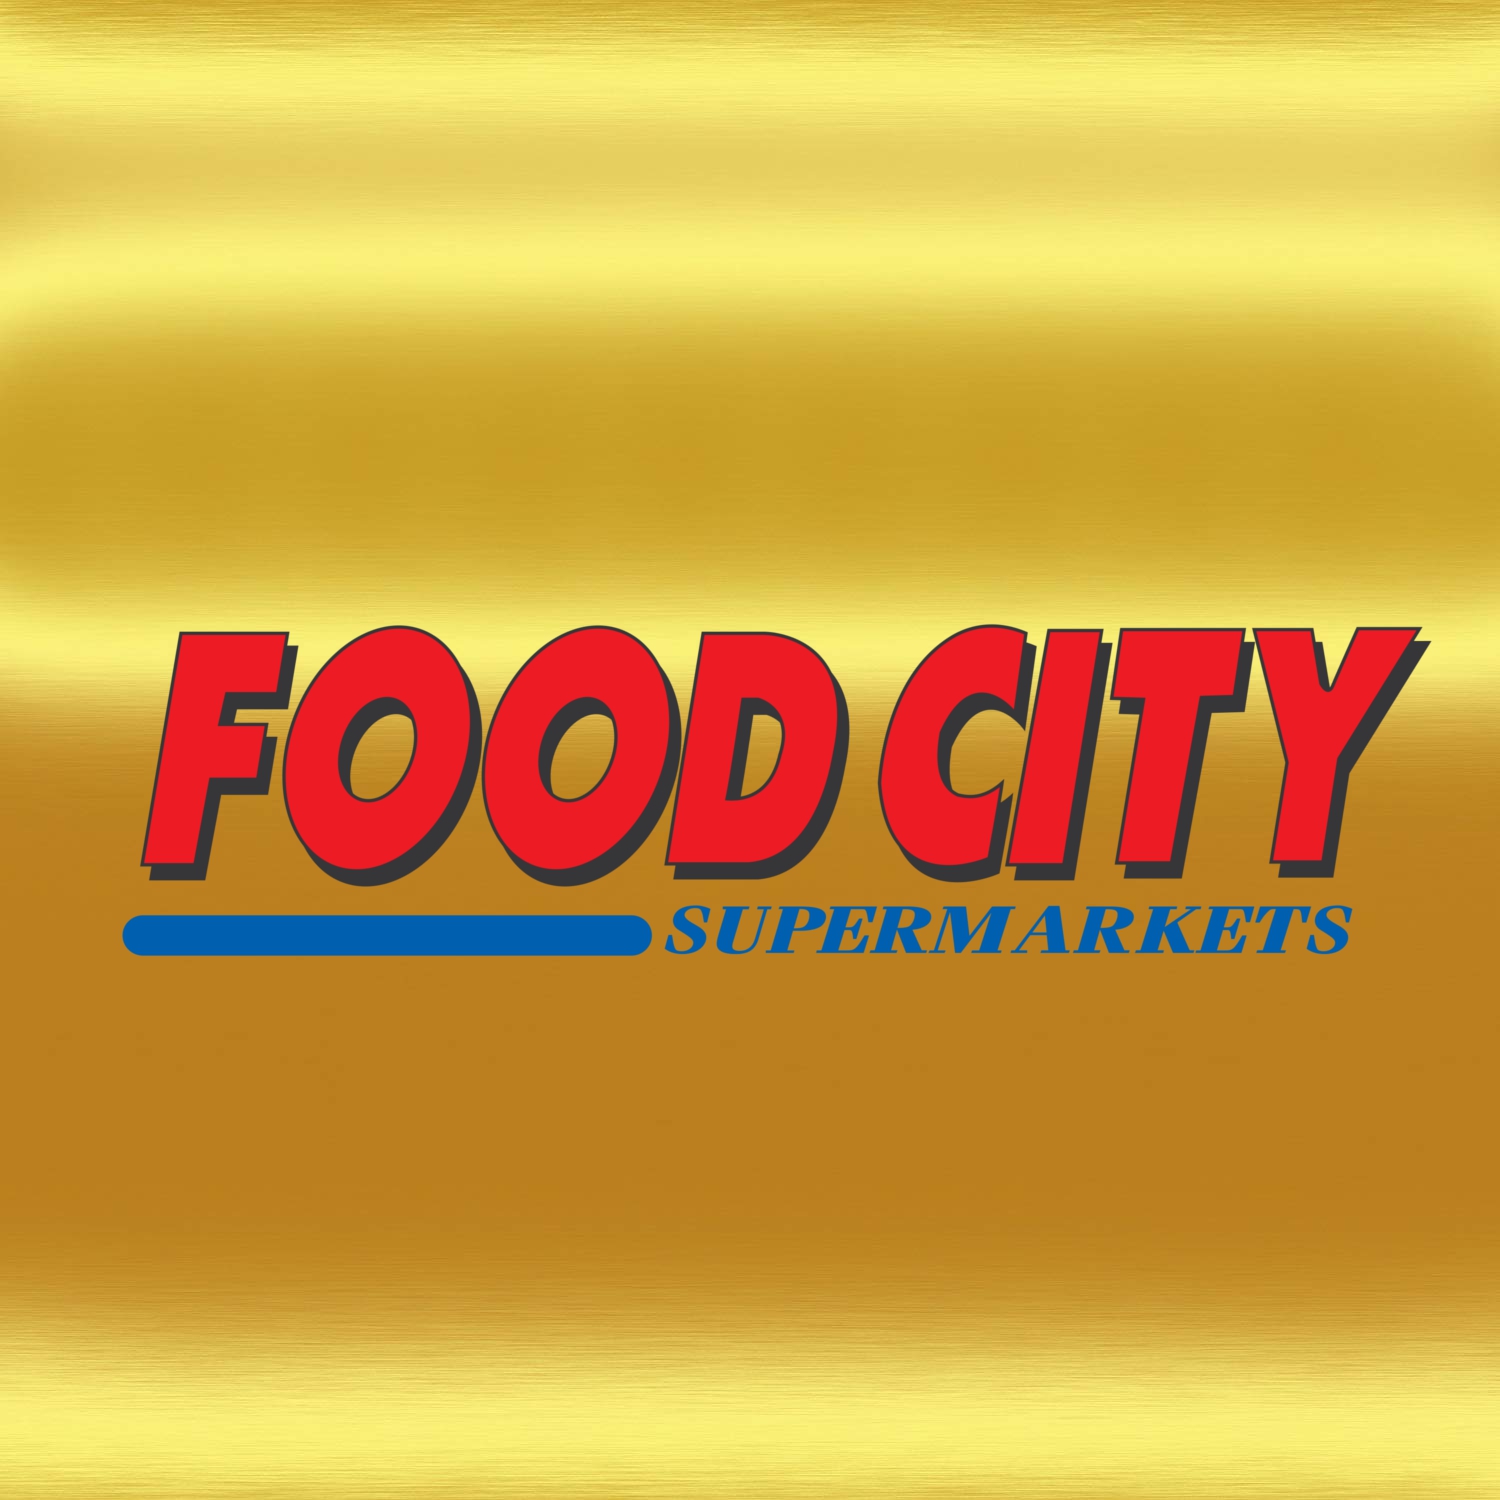 Food City Supermarket logo.jpg